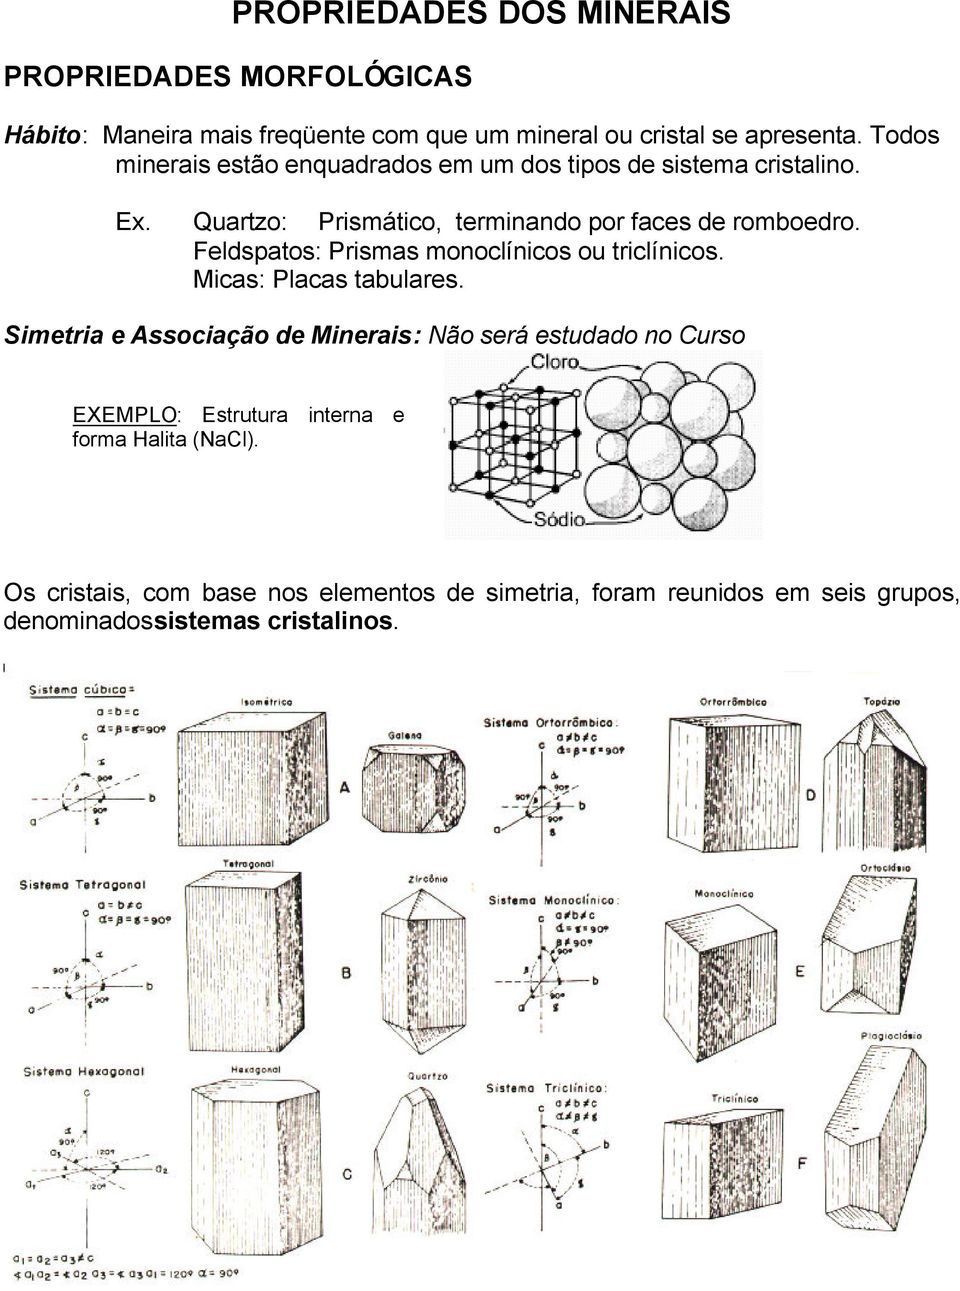 Feldspatos: Prismas monoclínicos ou triclínicos. Micas: Placas tabulares.